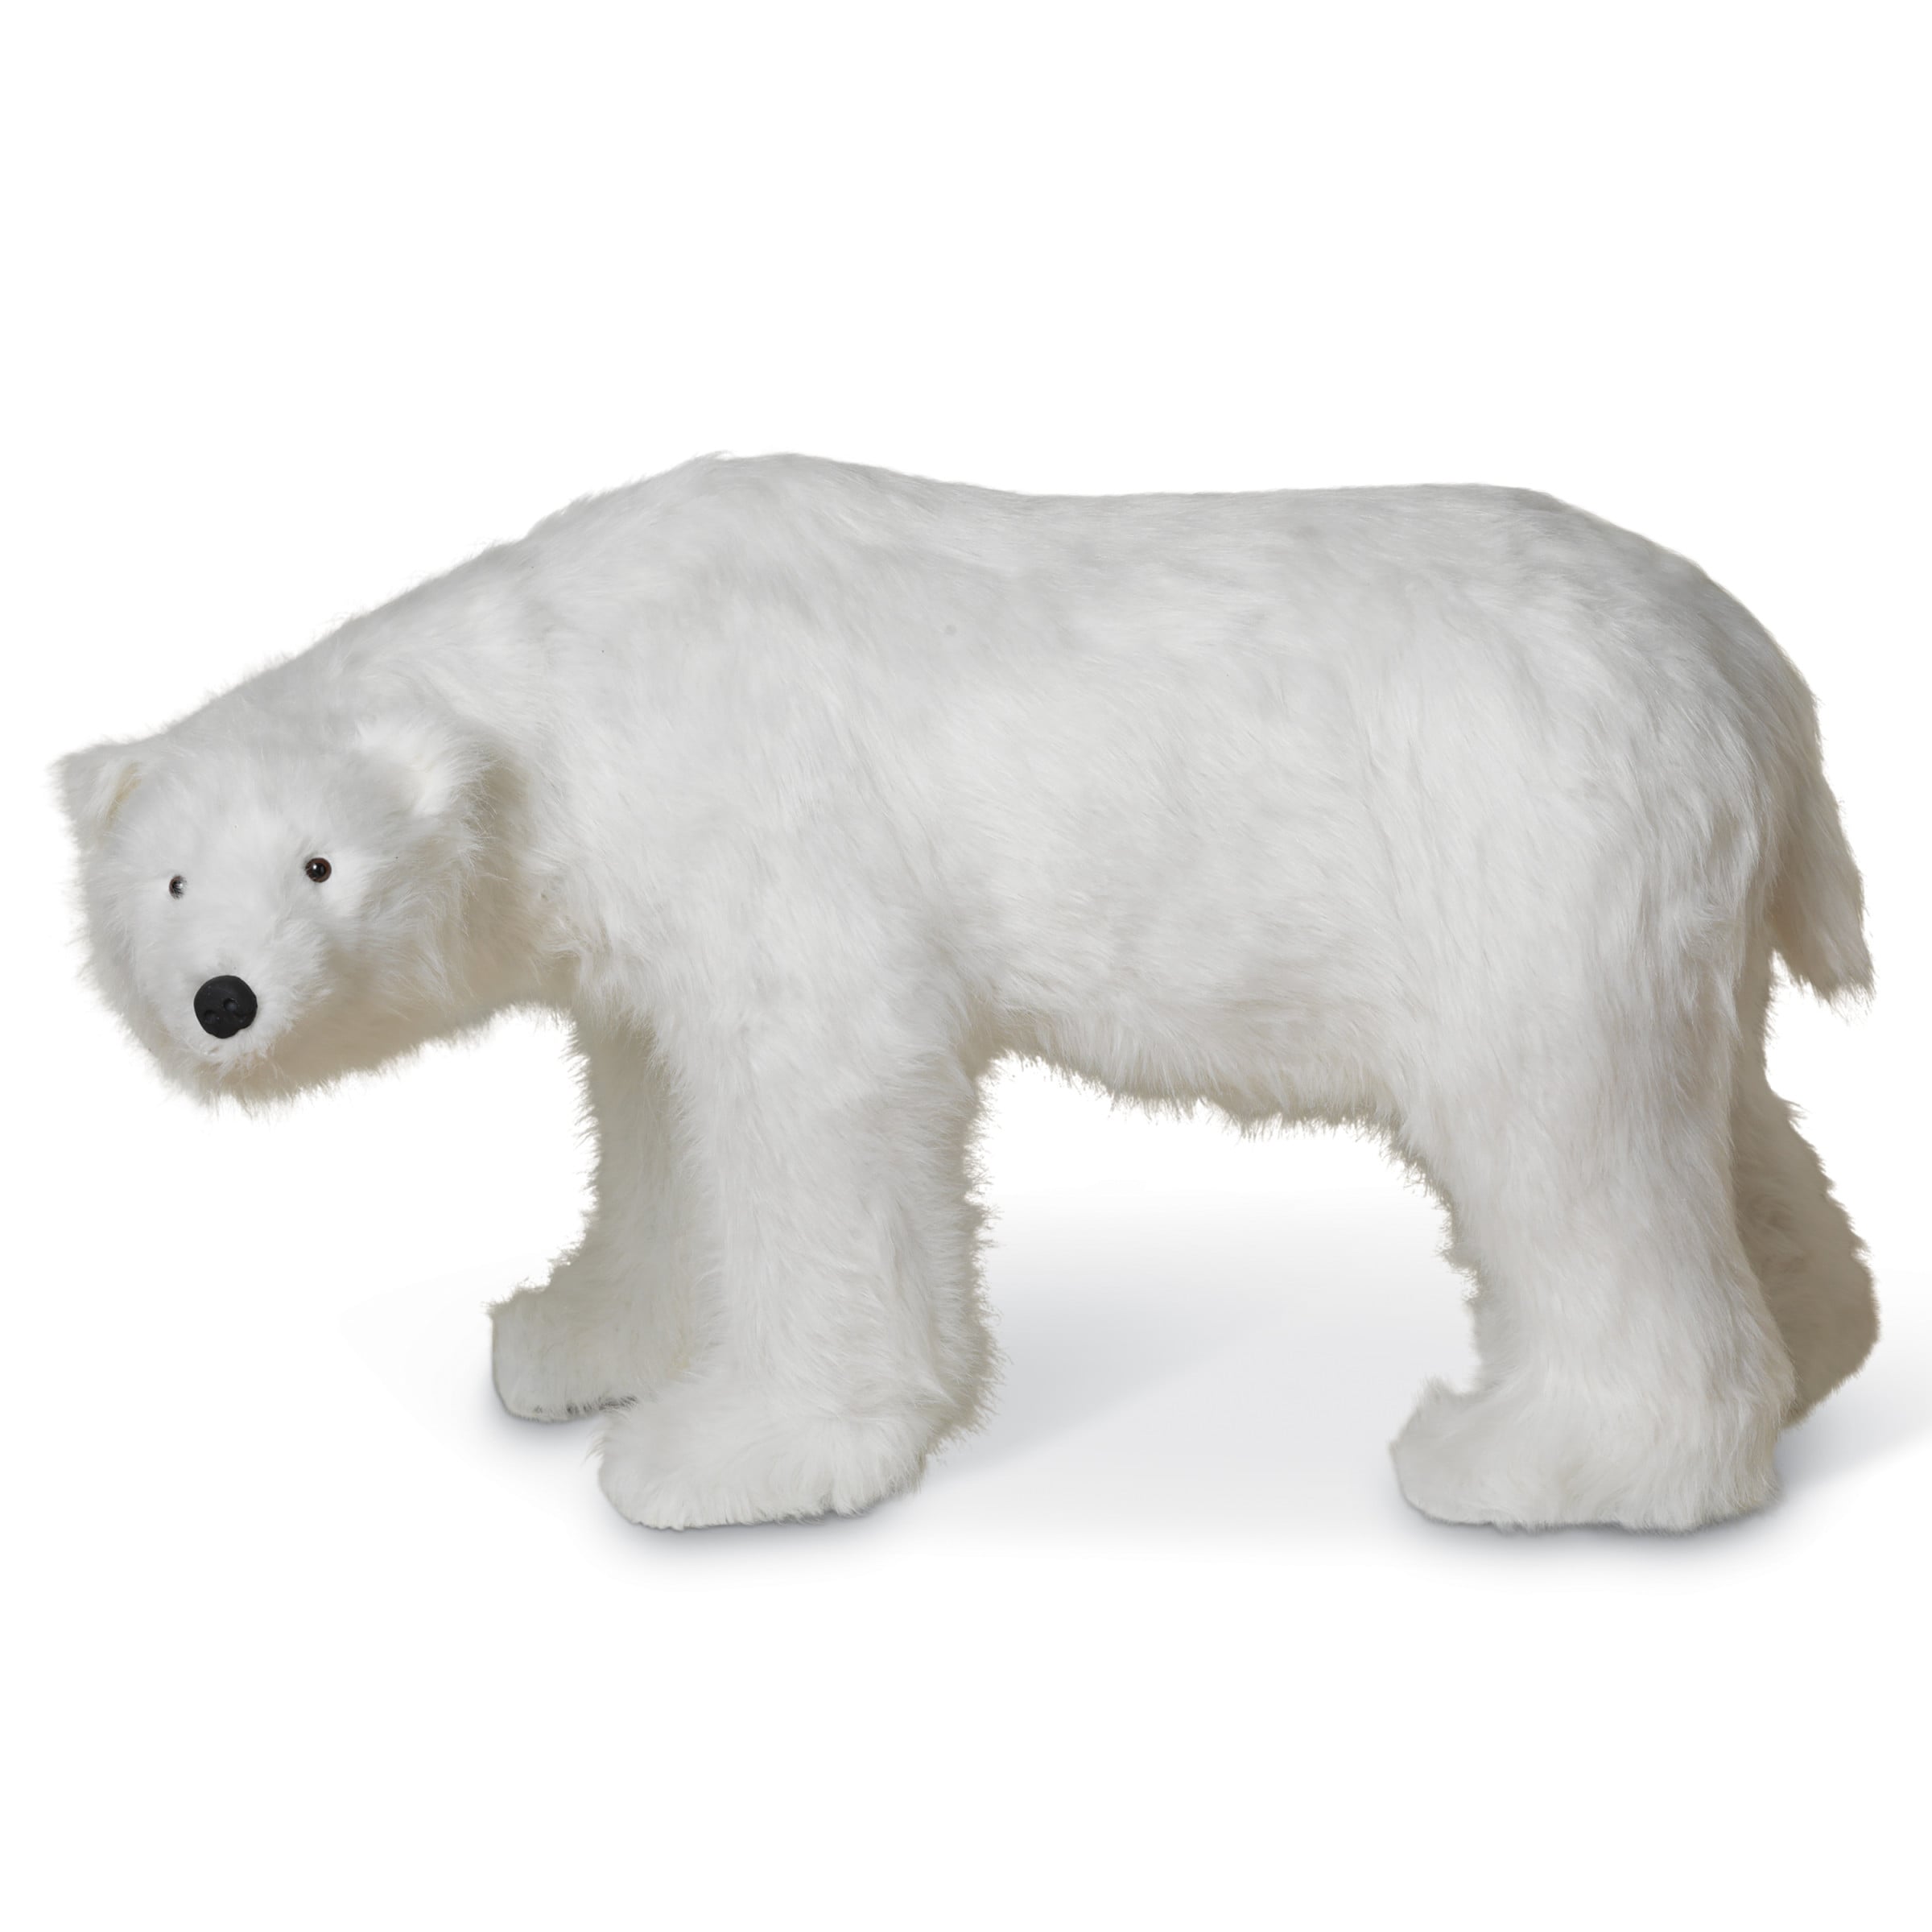 Is adding the Polar Bear Realistic? 